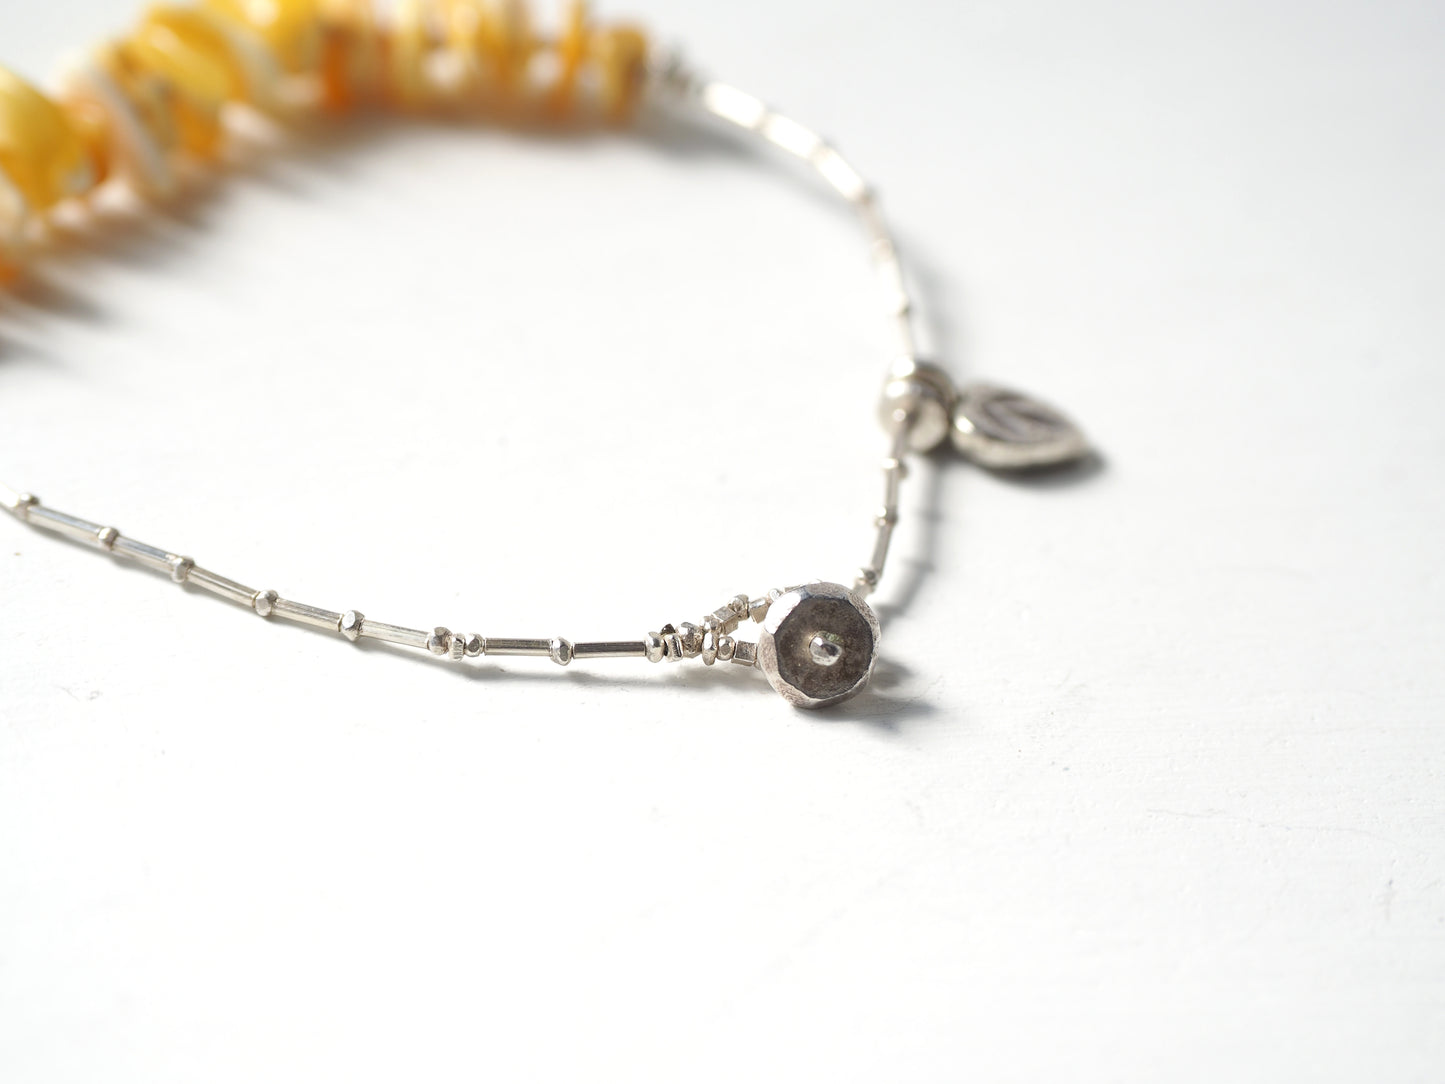 -Yellow amber- silver bracelet